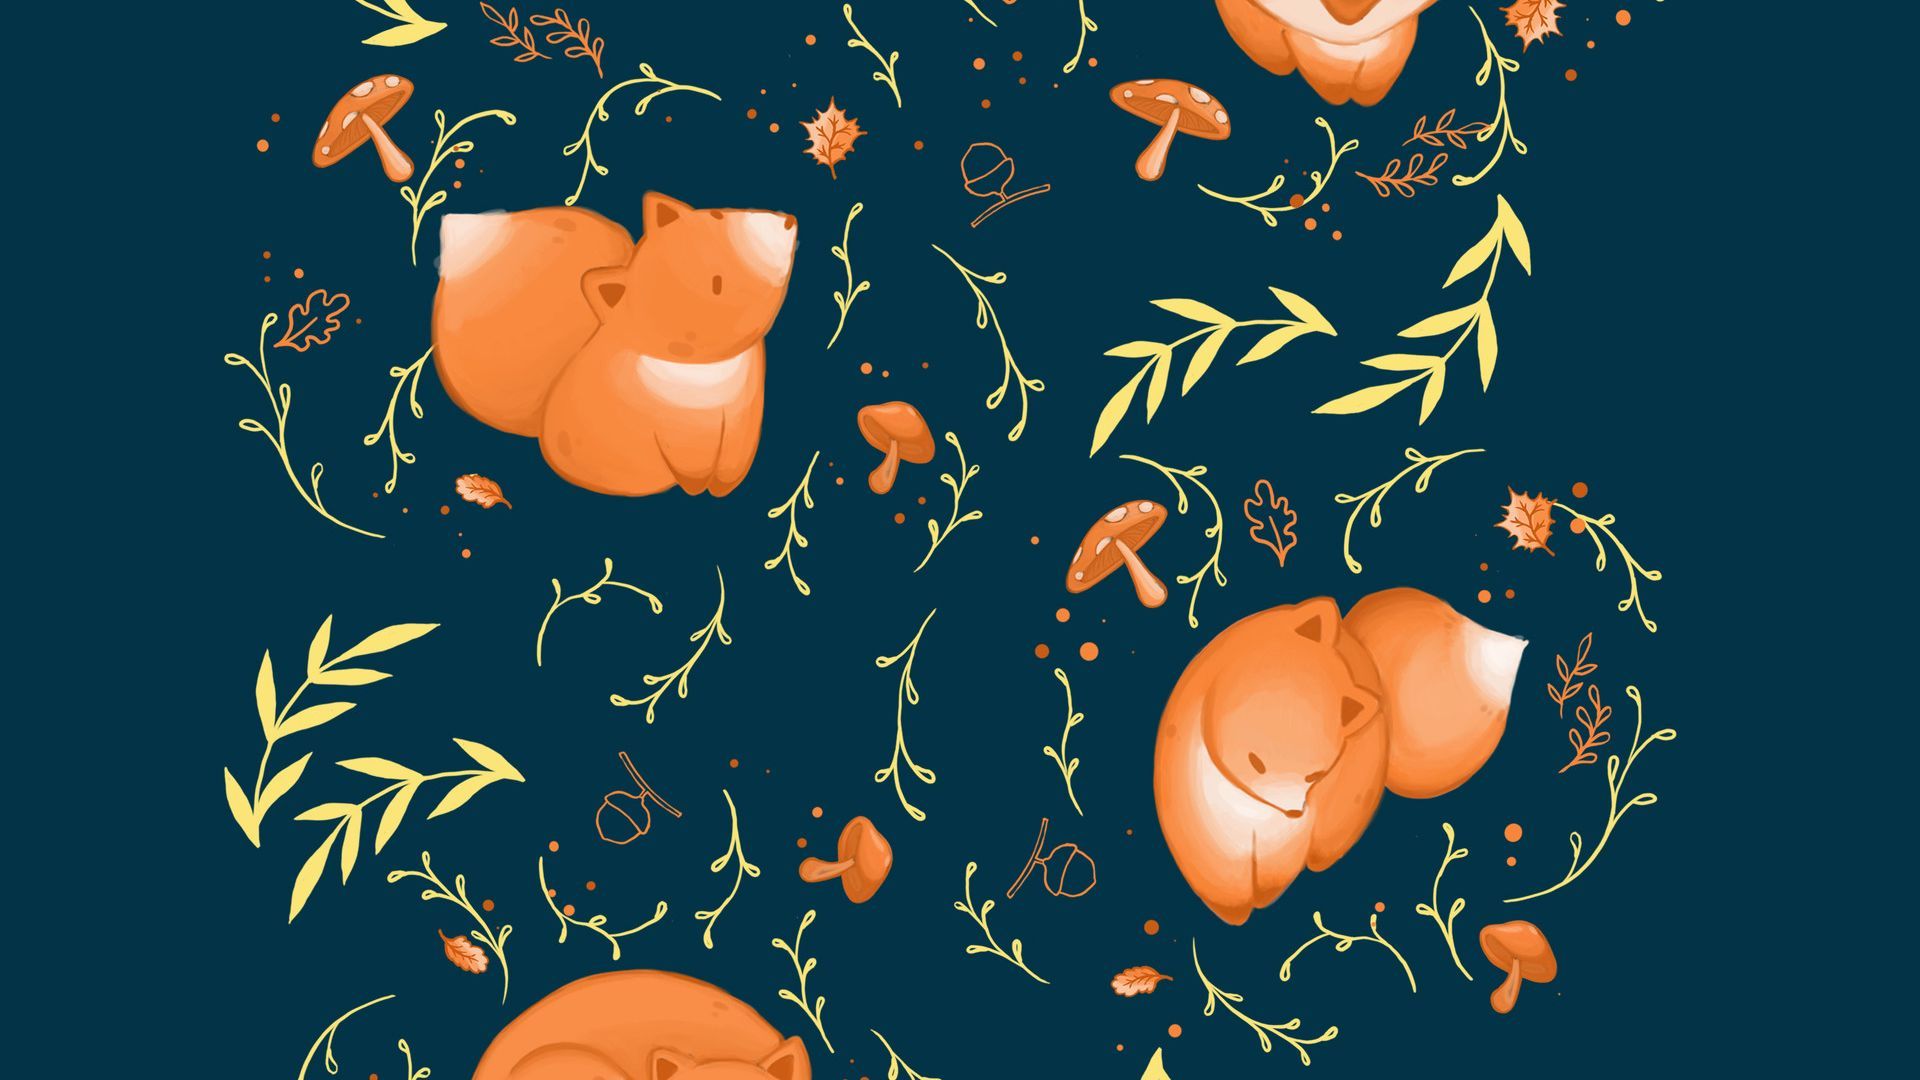 Download wallpaper 1920x1080 pattern, fox, leaves, branches, mushrooms, acorns full hd, hdtv, fhd, 1080p HD background